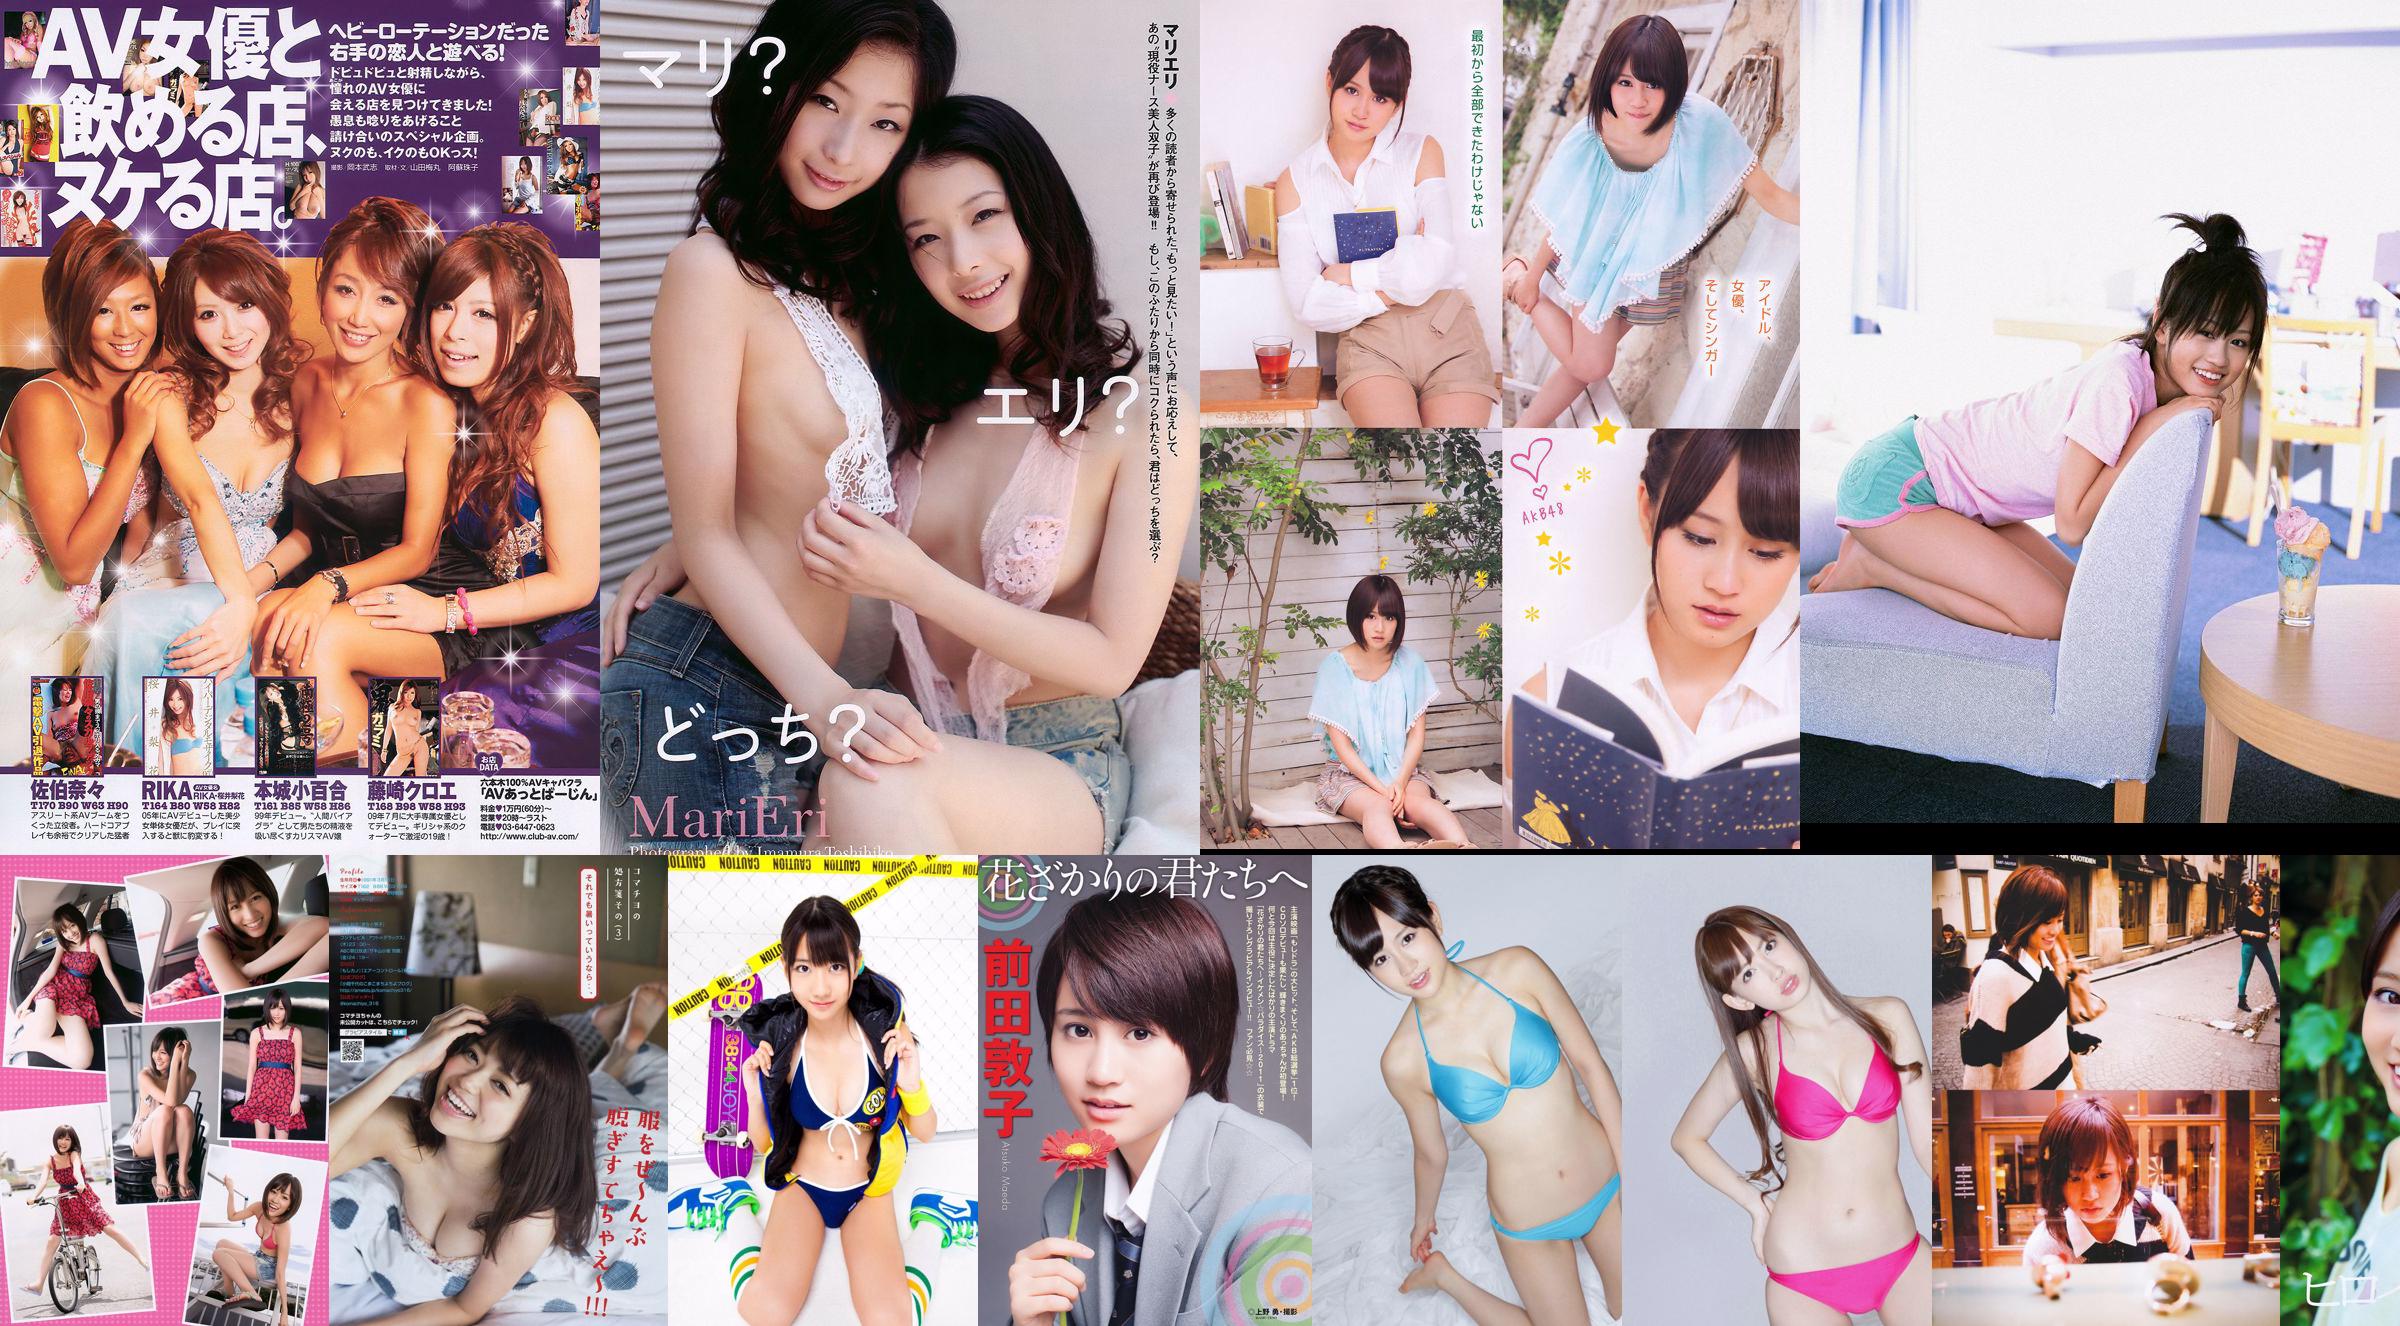 [Young Magazine] Maeda Atsuko Koma Chiyo, 2015 № 34, фото-журнал No.f07a5e Страница 4